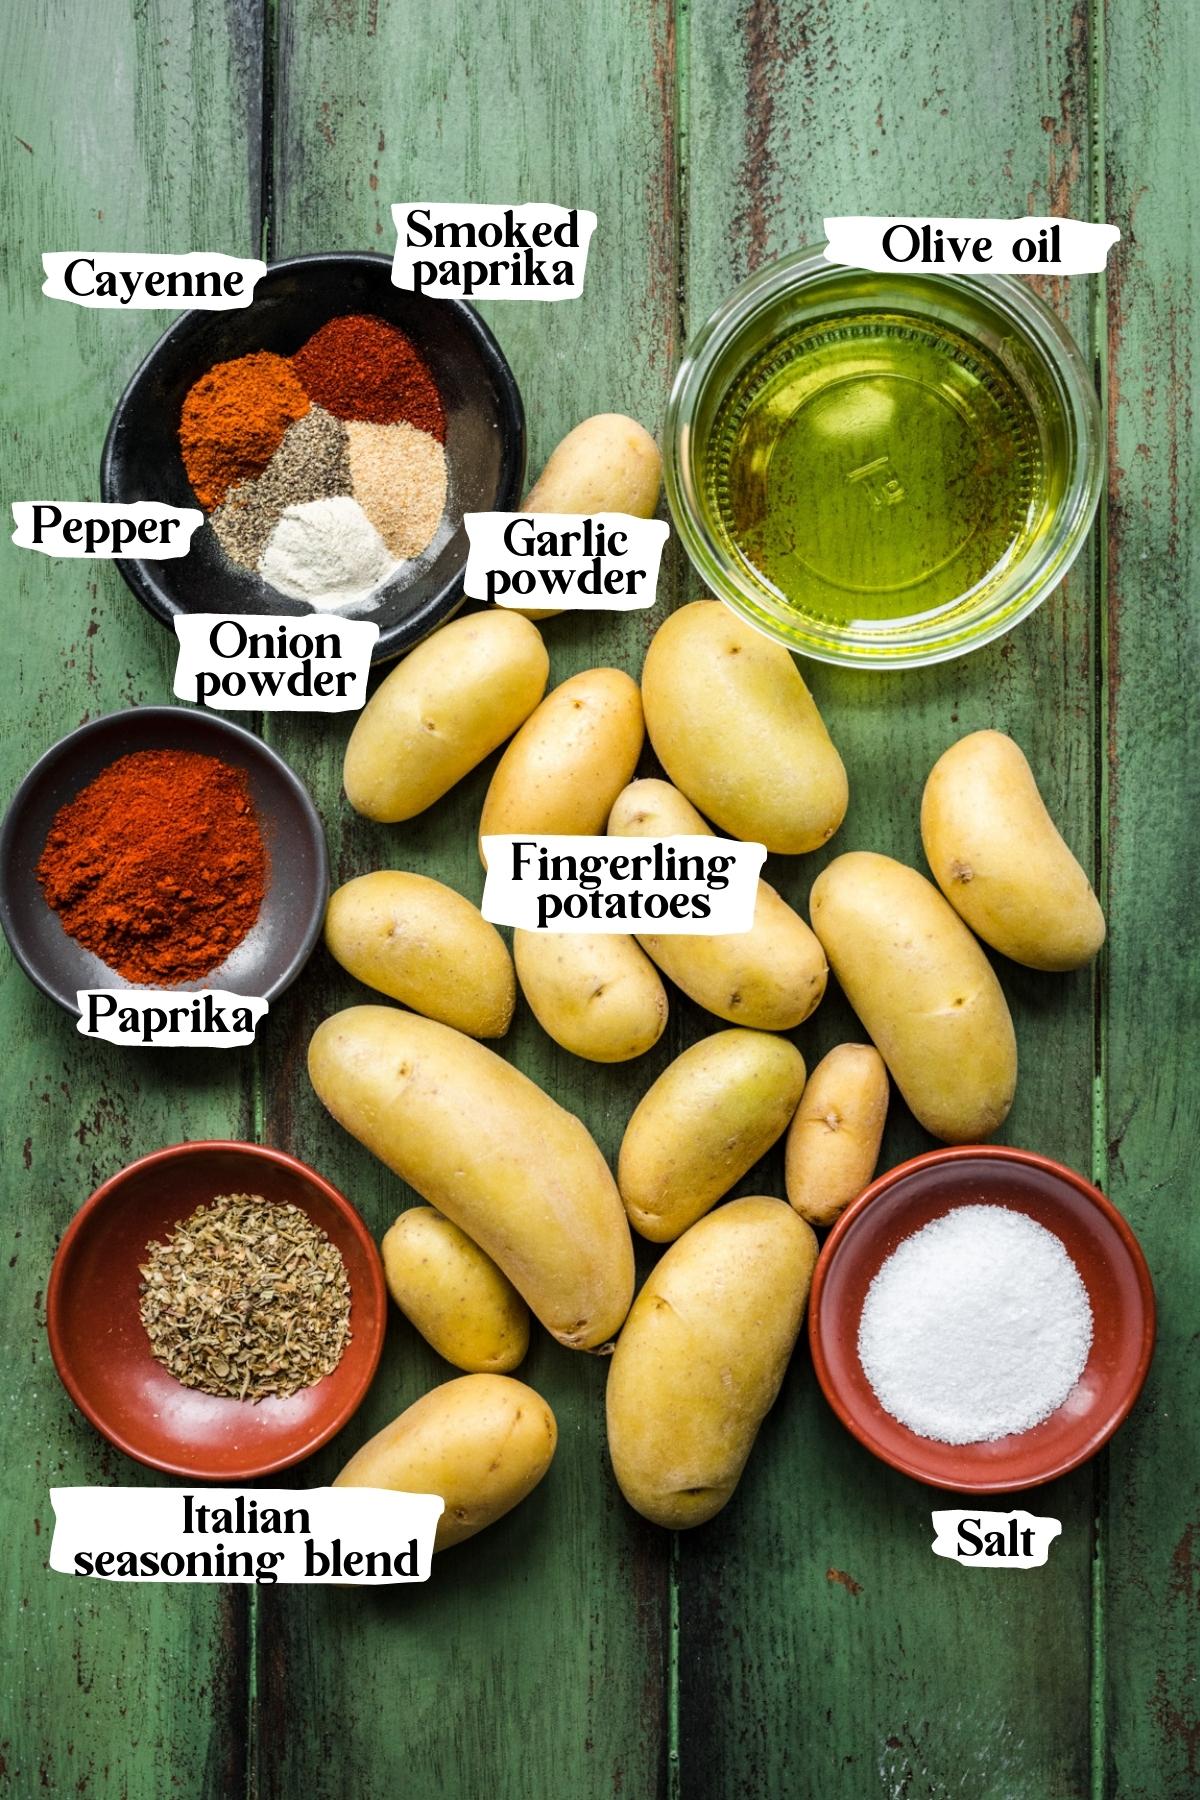 Overhead view of cajun potatoes ingredients, including fingerling potatoes, seasoning, and oil.